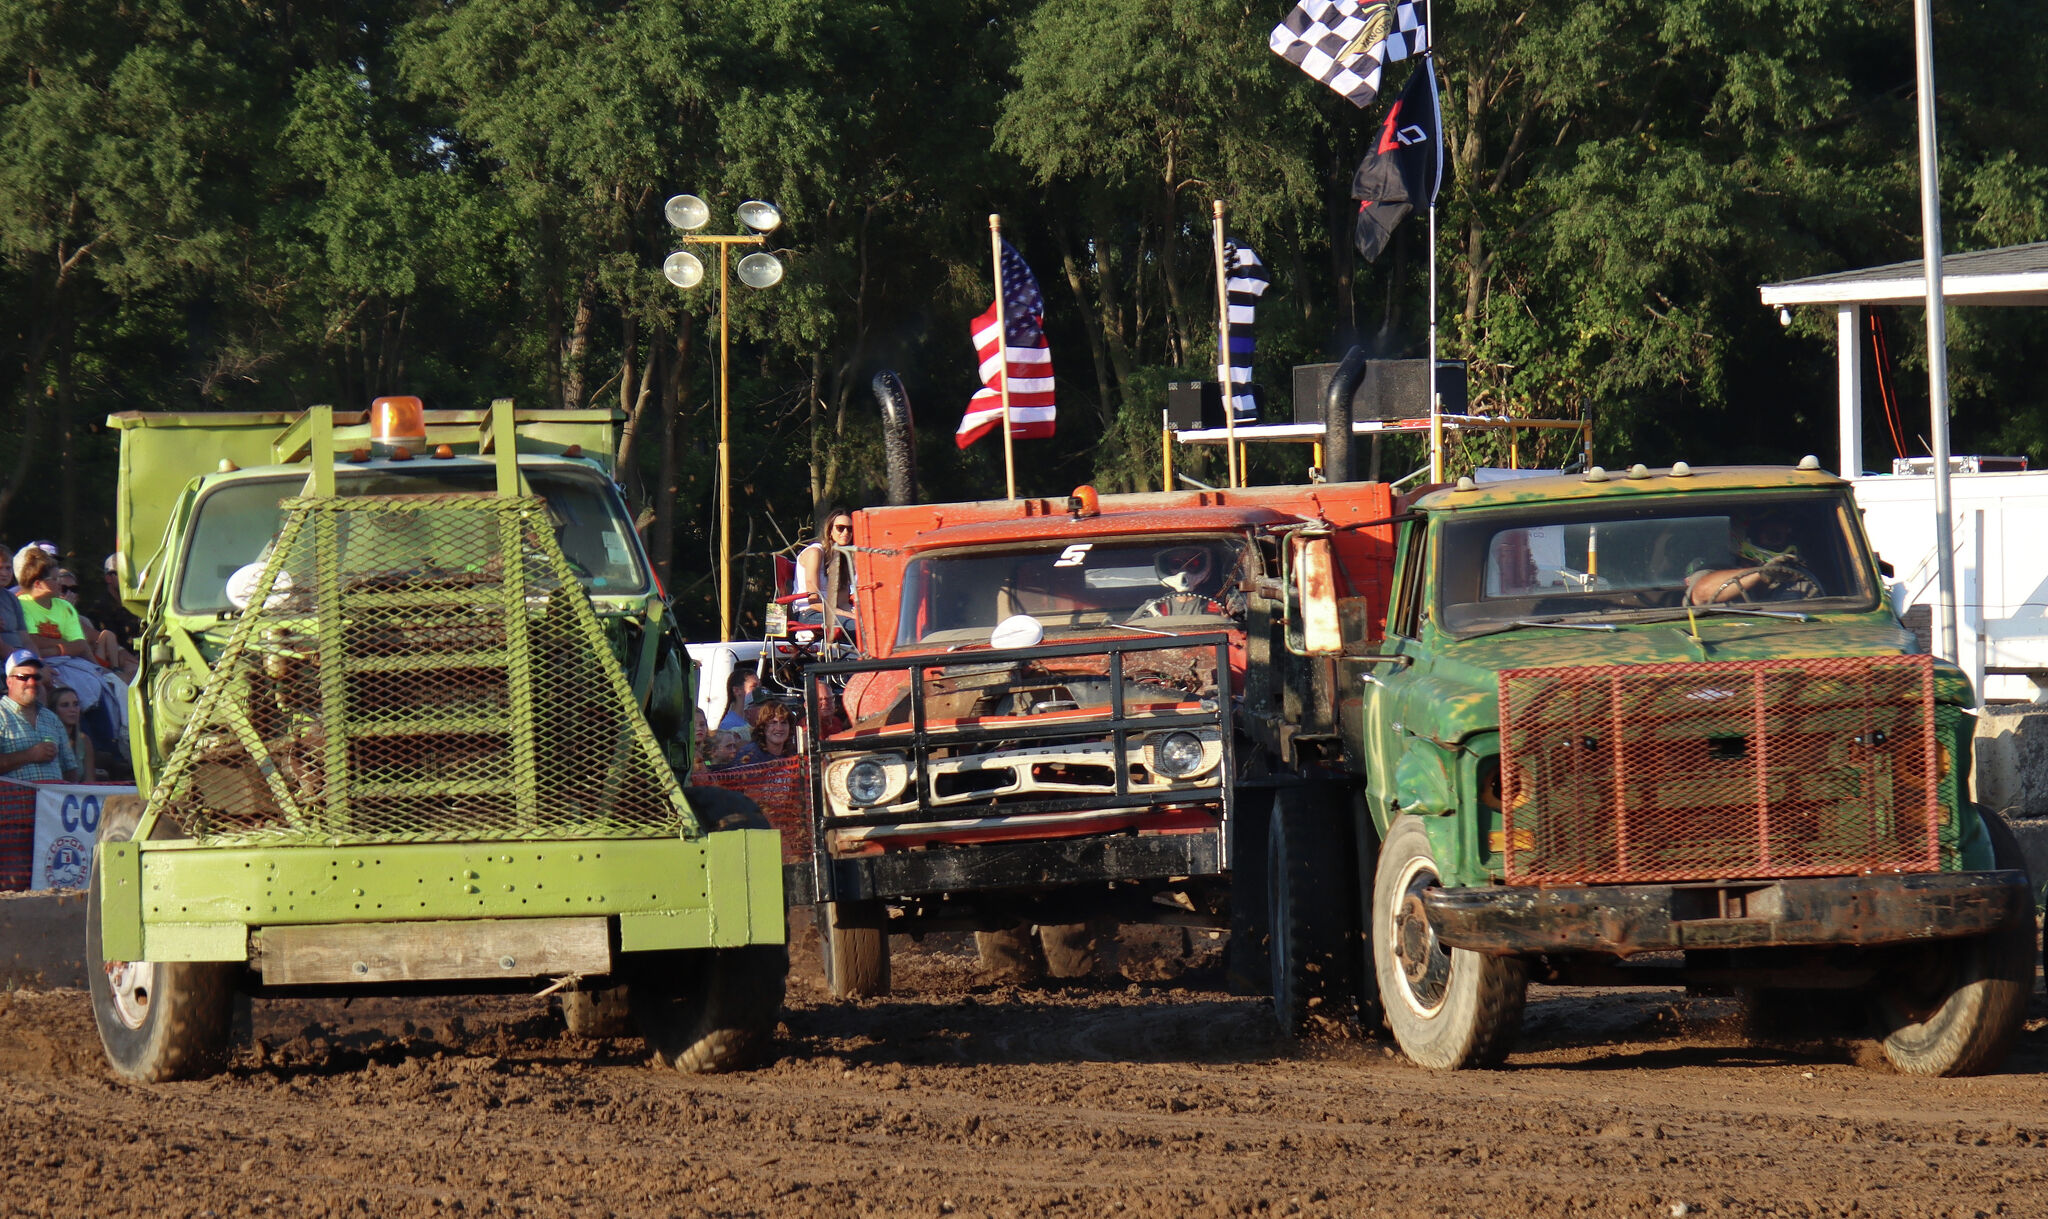 Redneck Truck Race highlights Friday at Huron fair